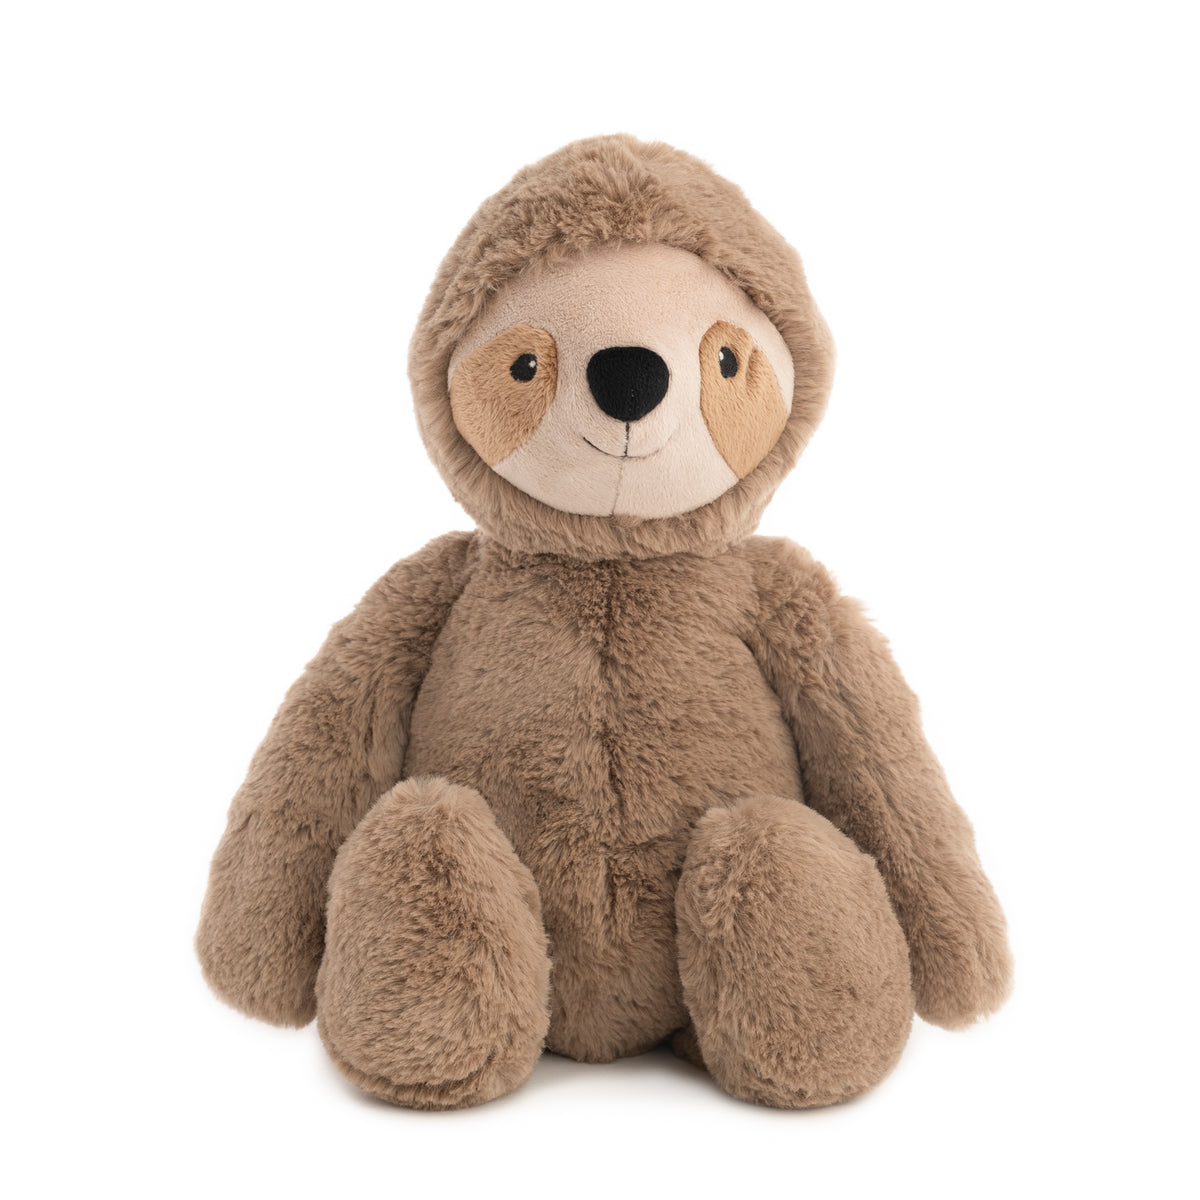 natureZoo Plush Teddy Bear – Brown Sloth